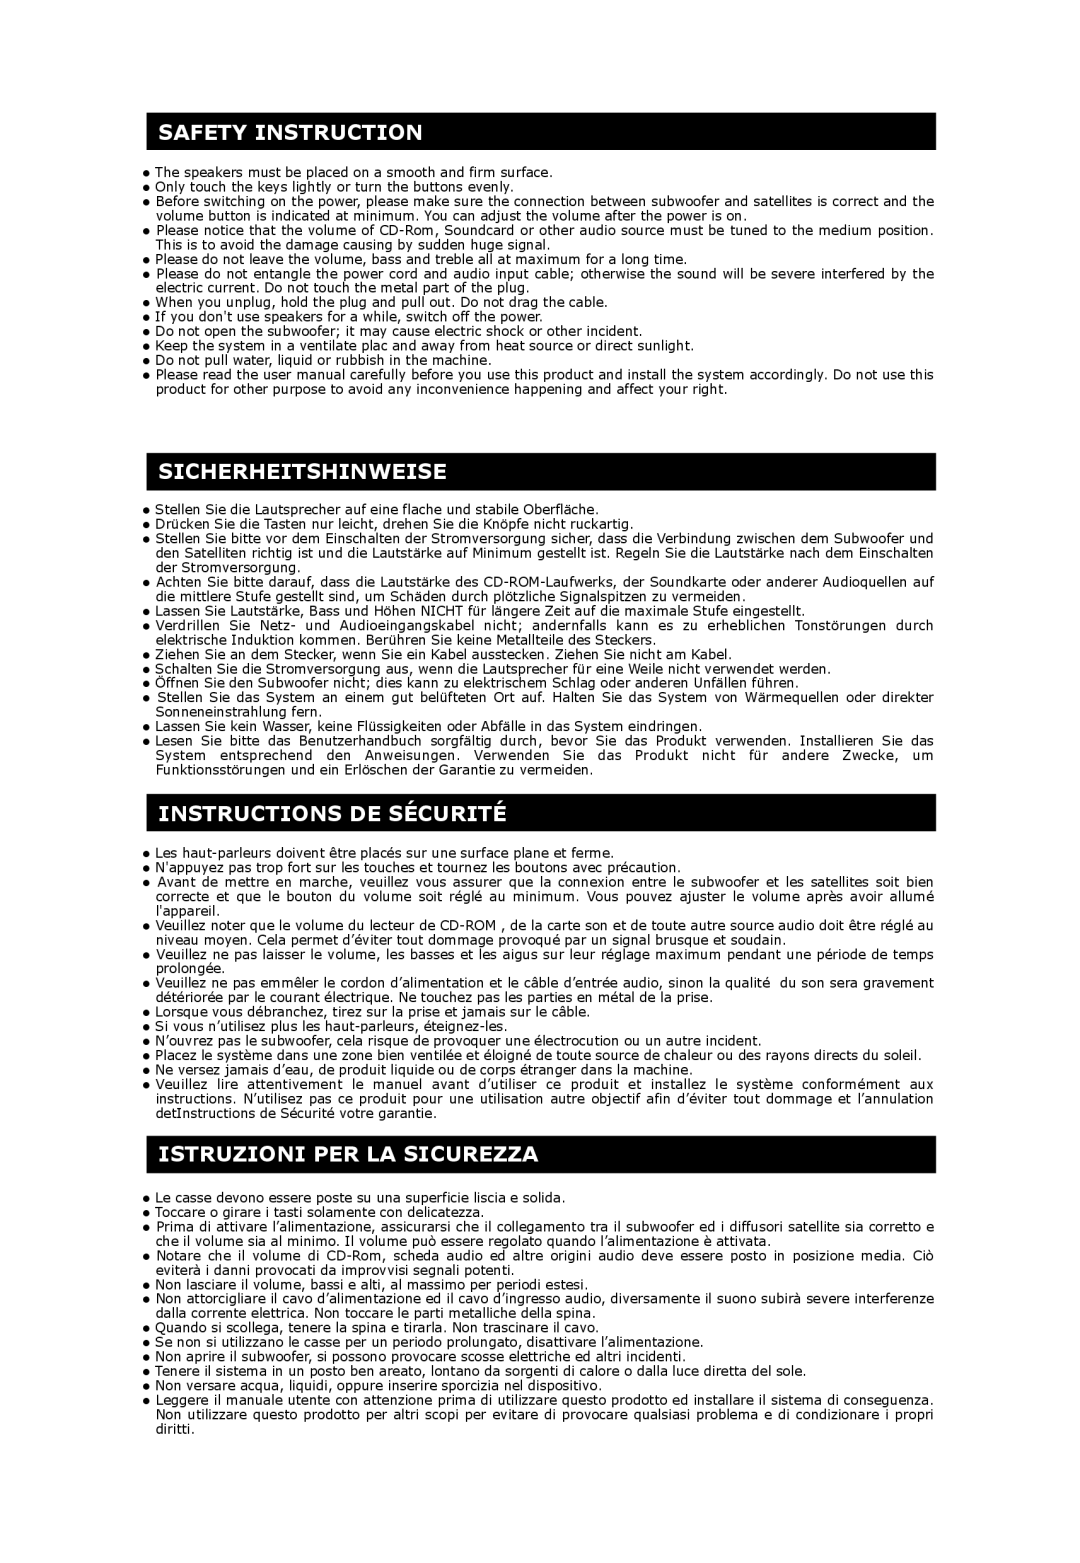 Ozaki Worldwide EM928 manual Safety Instruction, Sicherheitshinweise, Instructions De Sécurité, Istruzioni Per La Sicurezza 